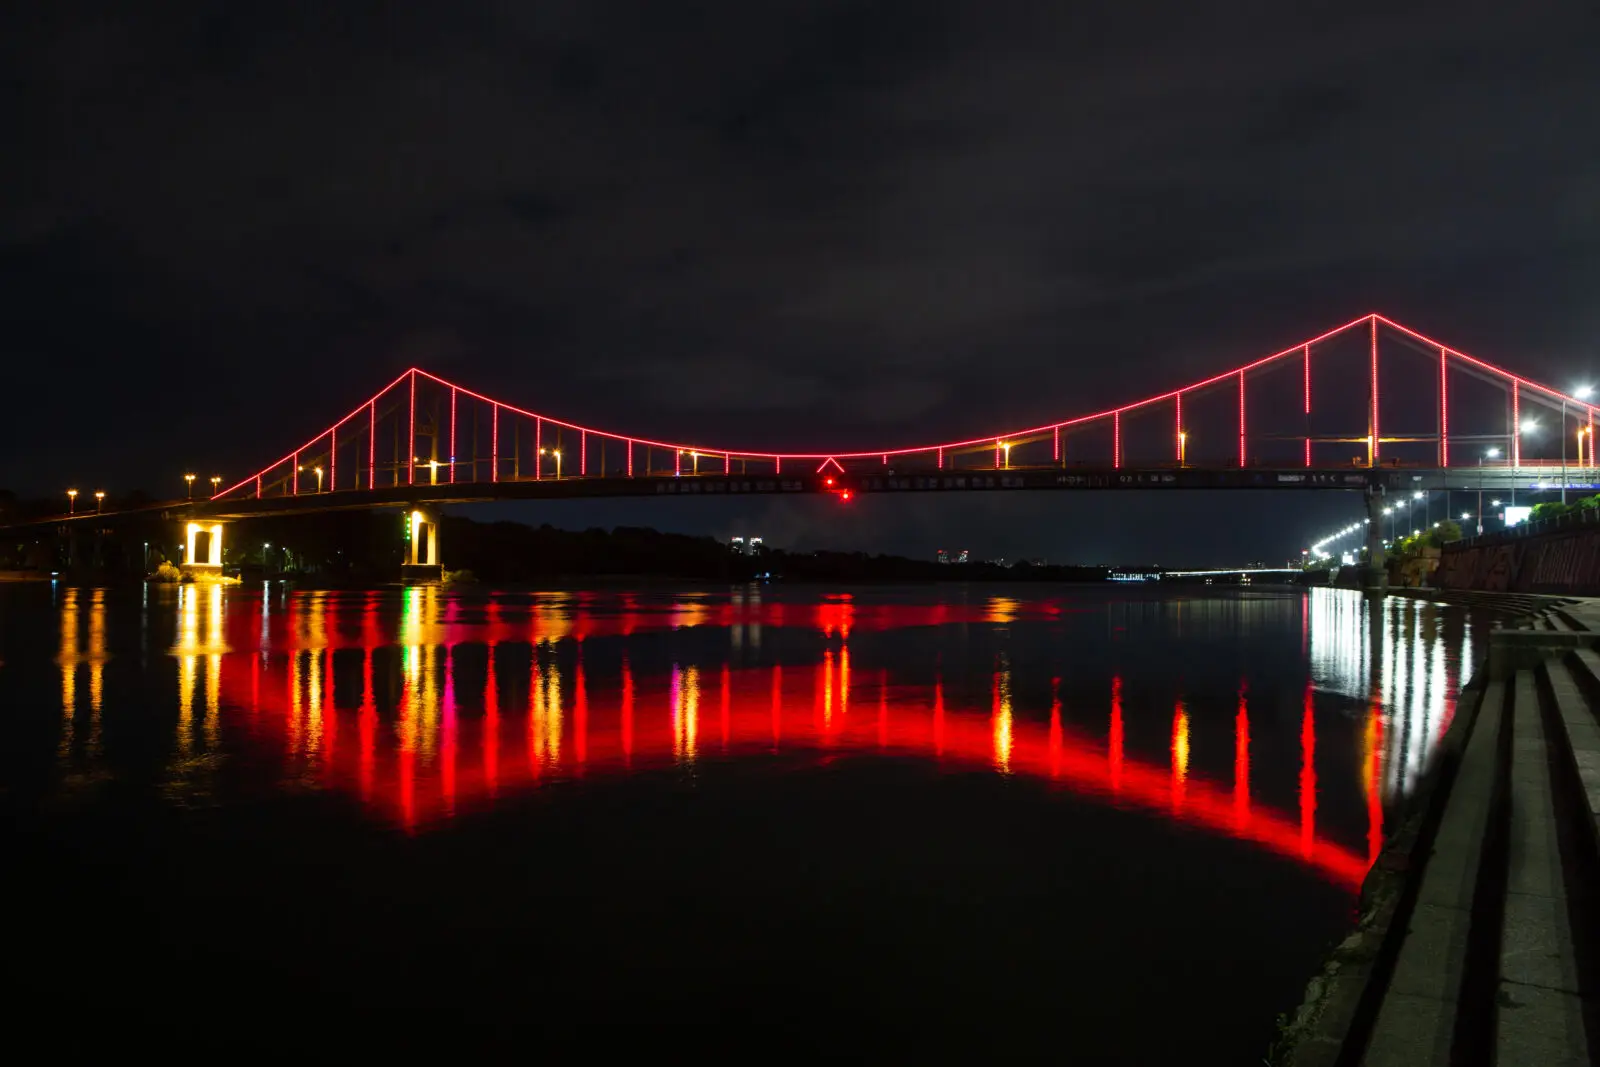 Parkovyi Bridge in Kyiv, Ukraine lights up red for World Heart Day